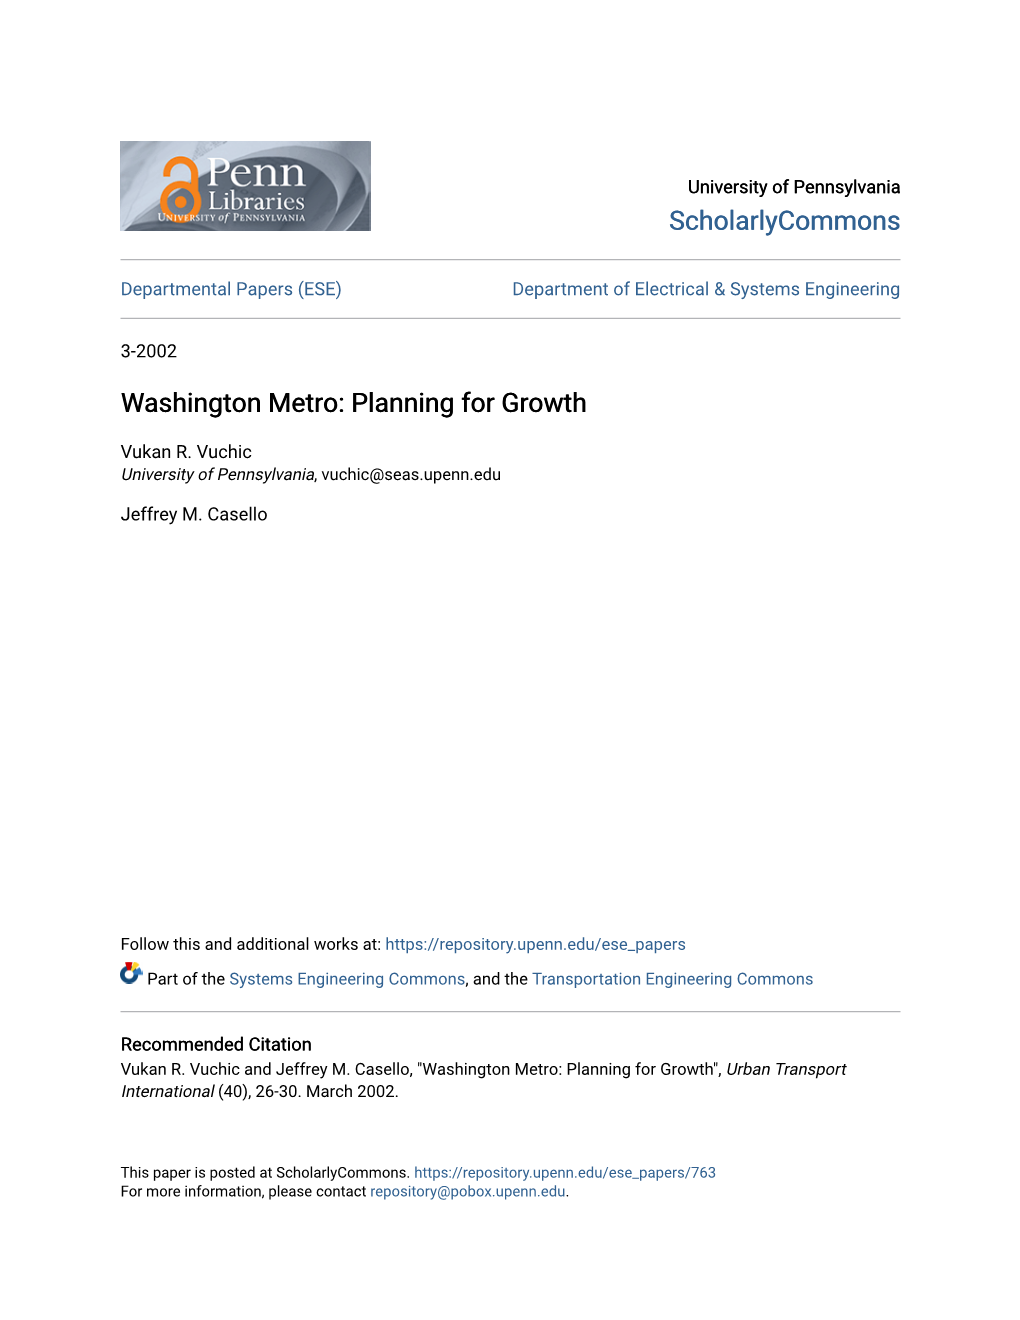 Washington Metro: Planning for Growth